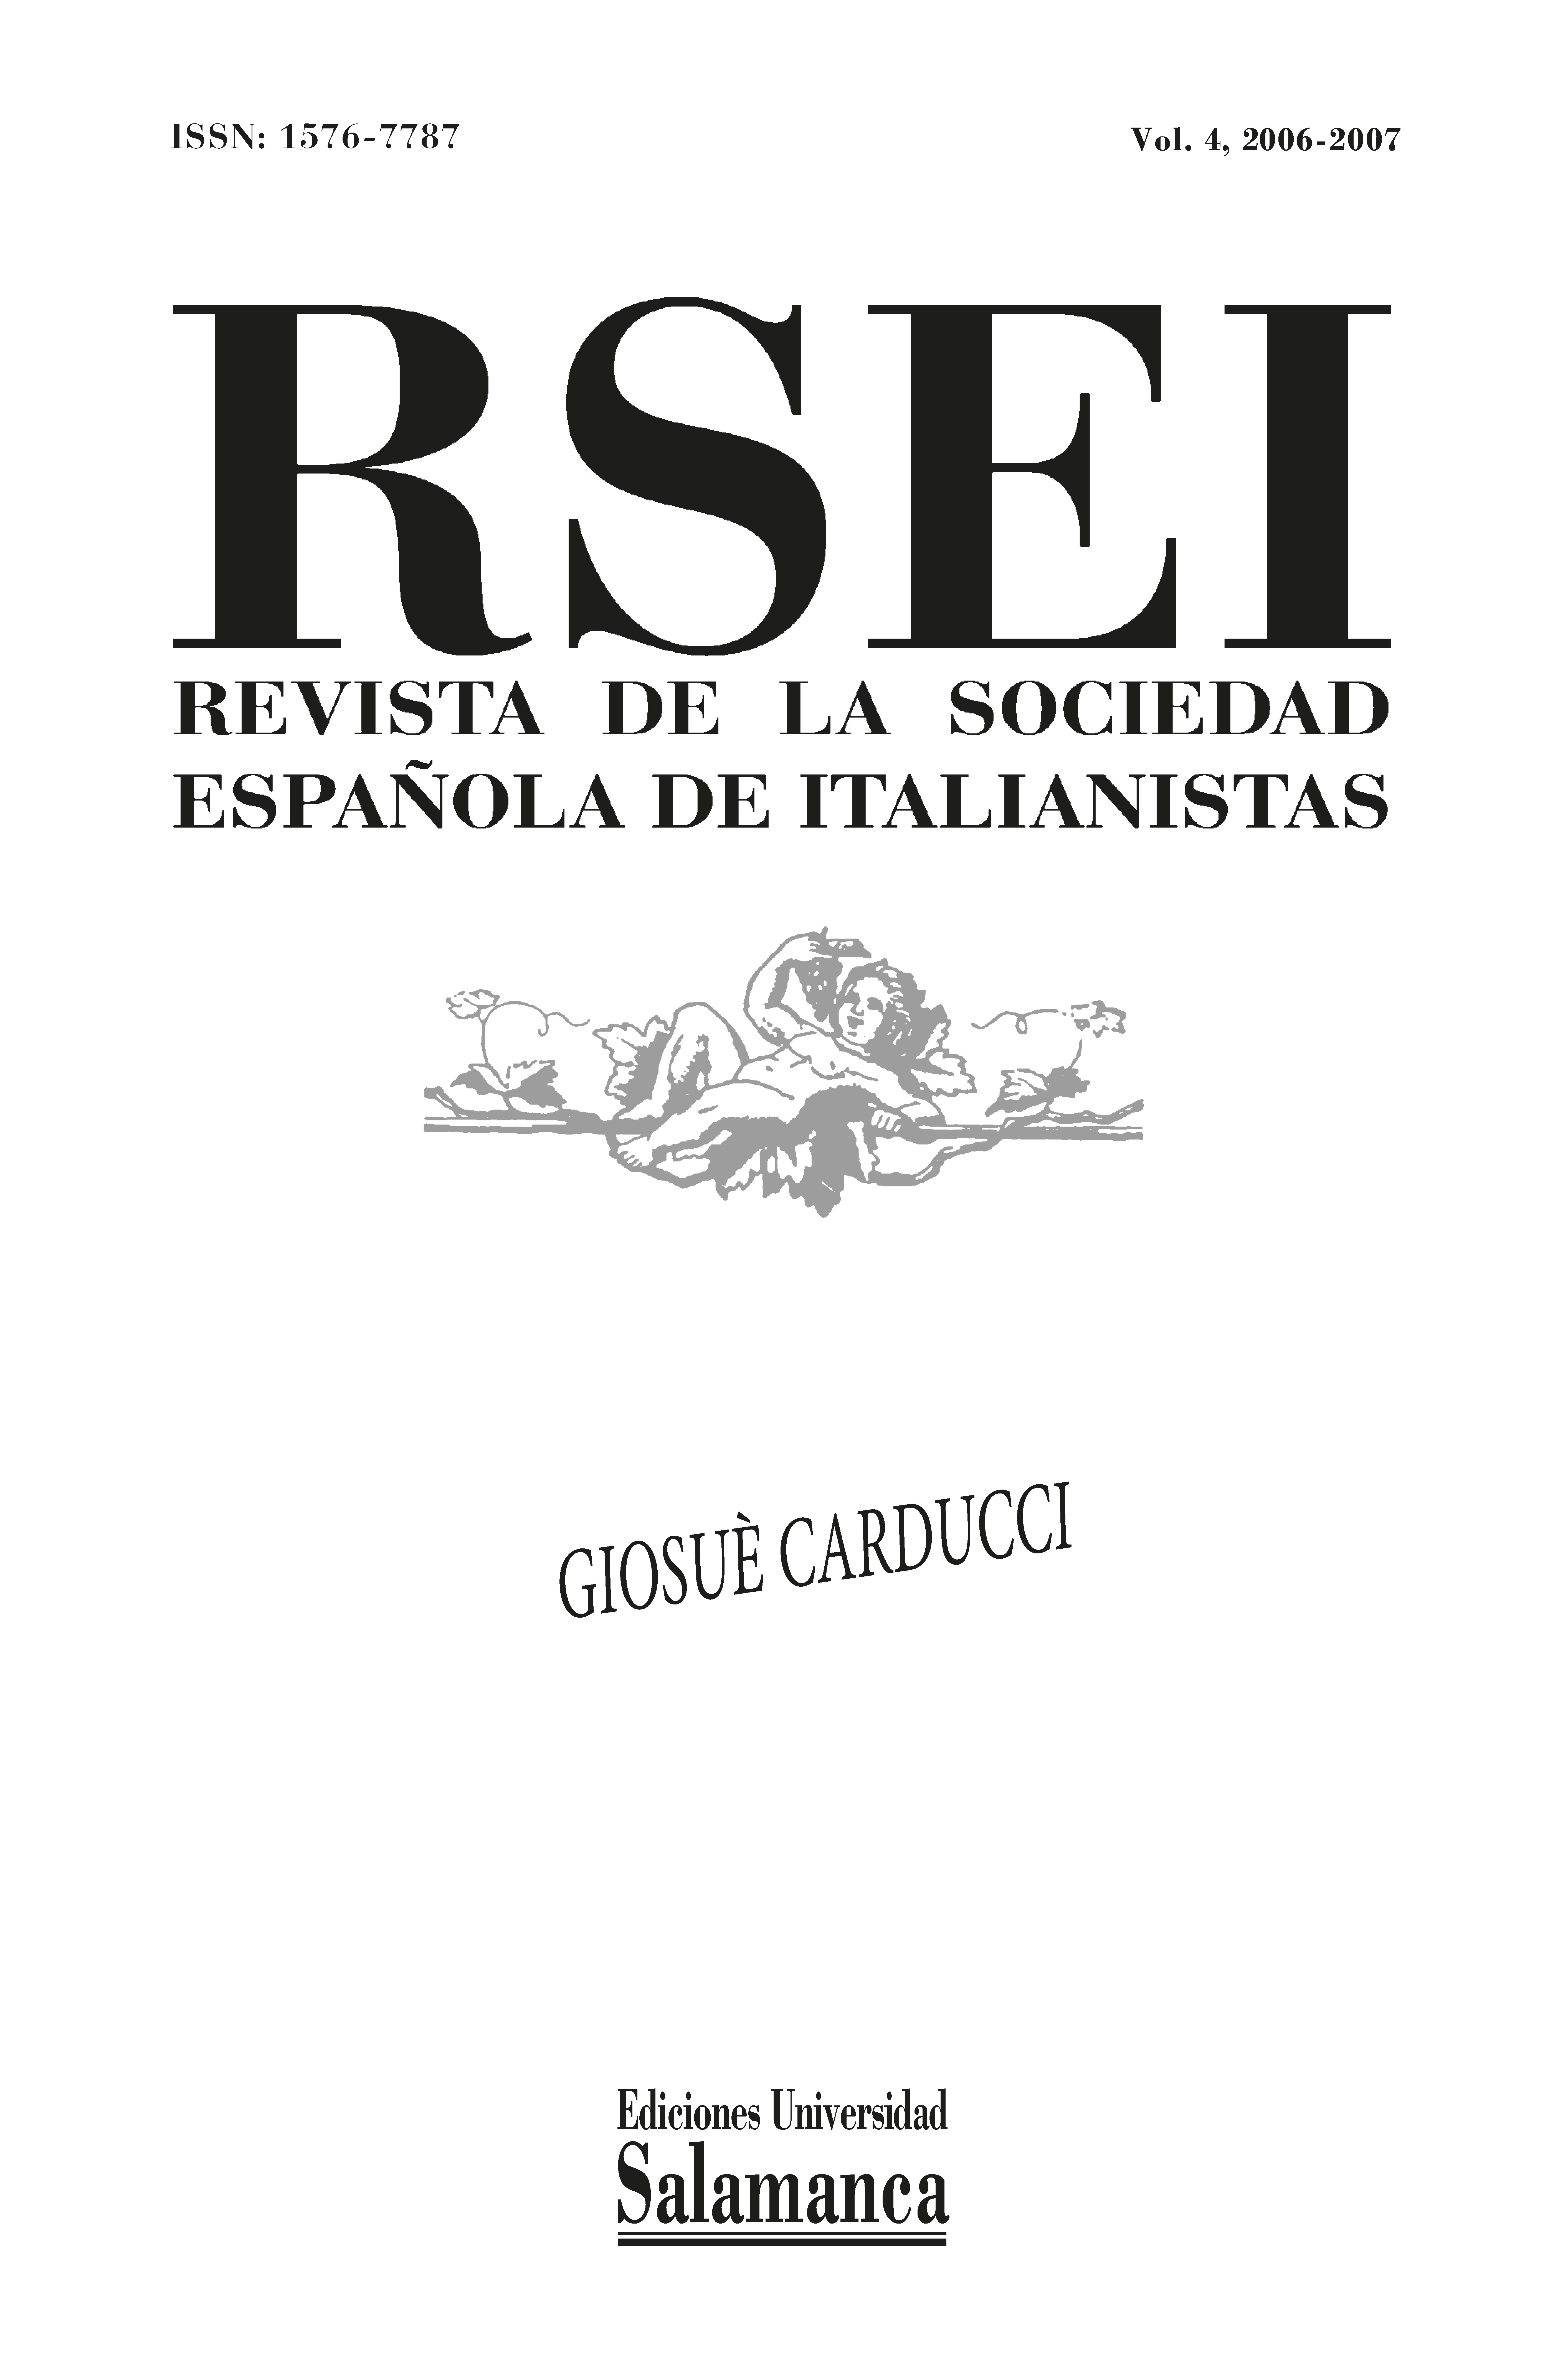                         Ver Vol. 4 (2006): Giosuè Carducci
                    